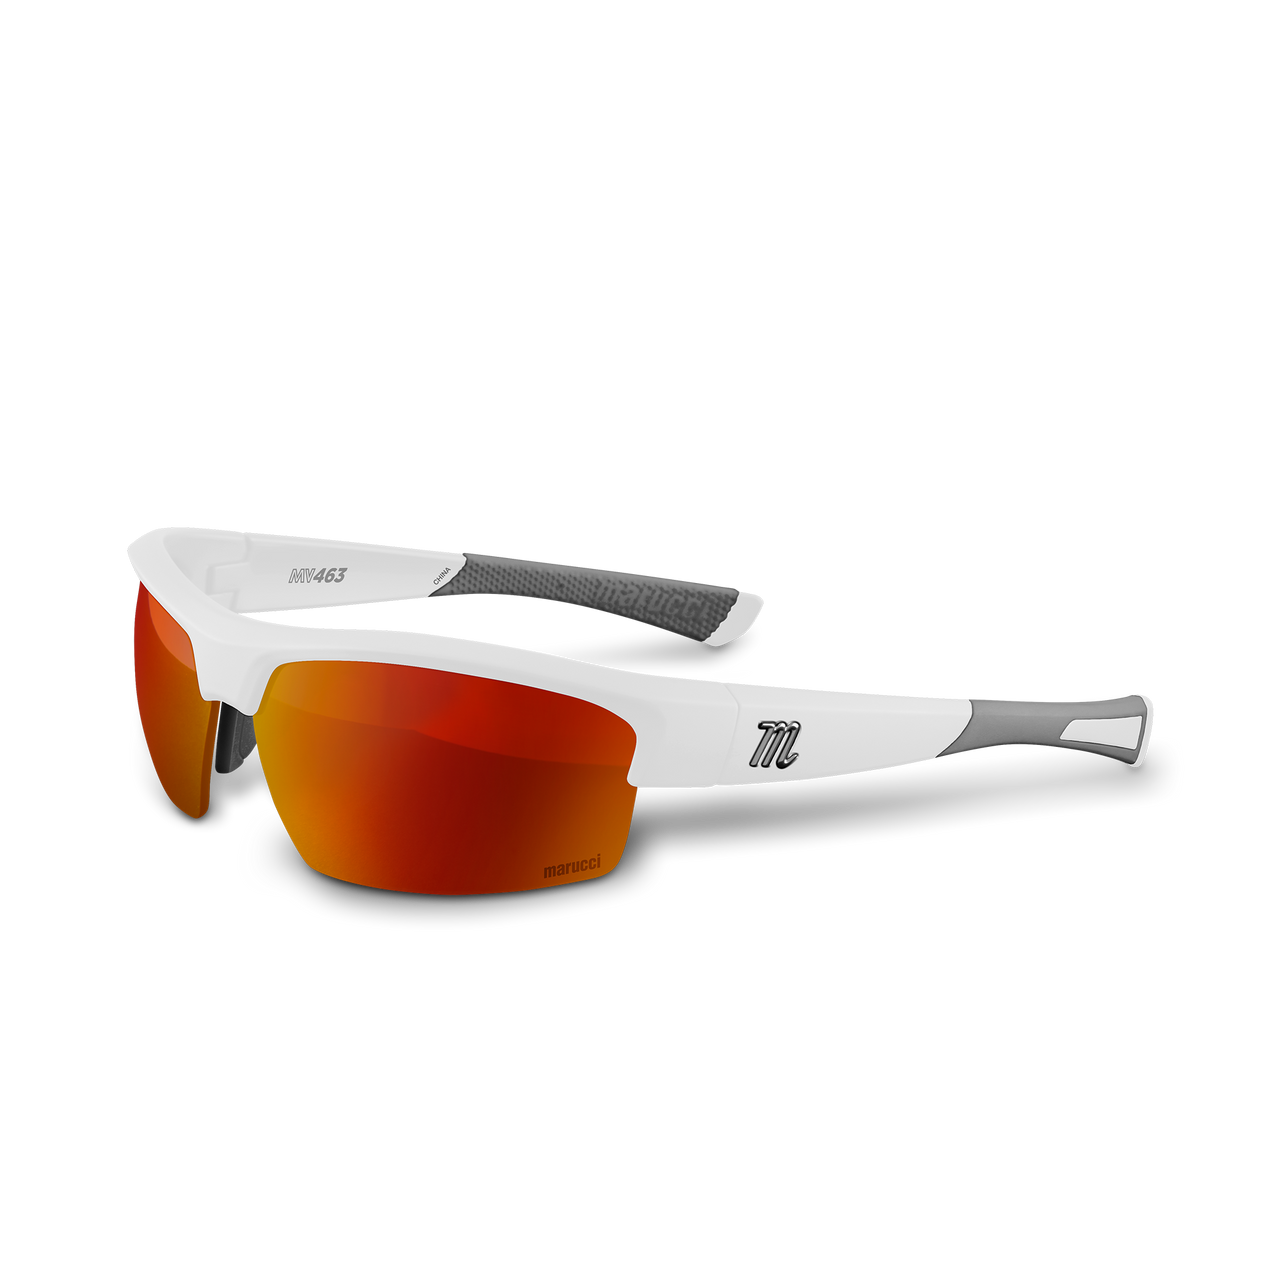 Marucci MV463 Performance Sunglasses - Matte White Matte White - Violet Lens With Red Mirror 